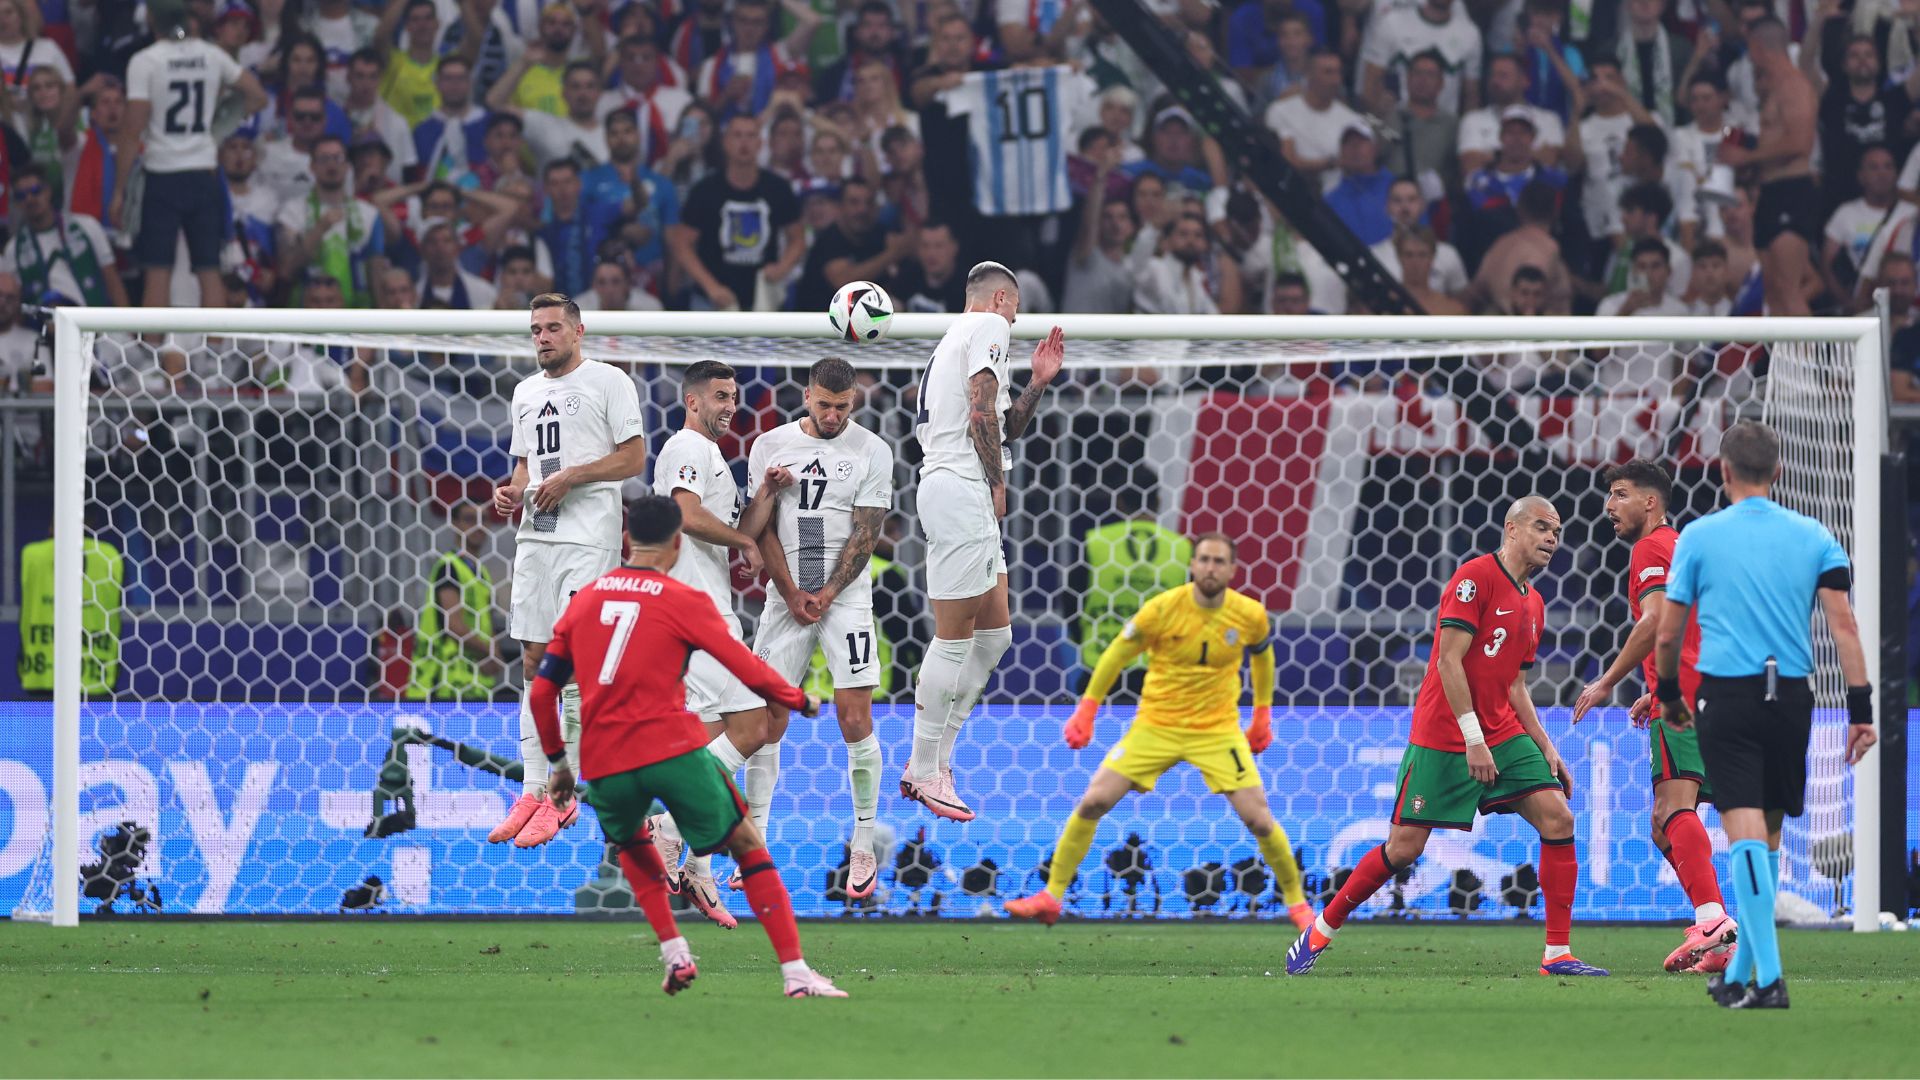 Cristiano Ronaldo taking a free kick against Slovenia (Credit: Getty Images)